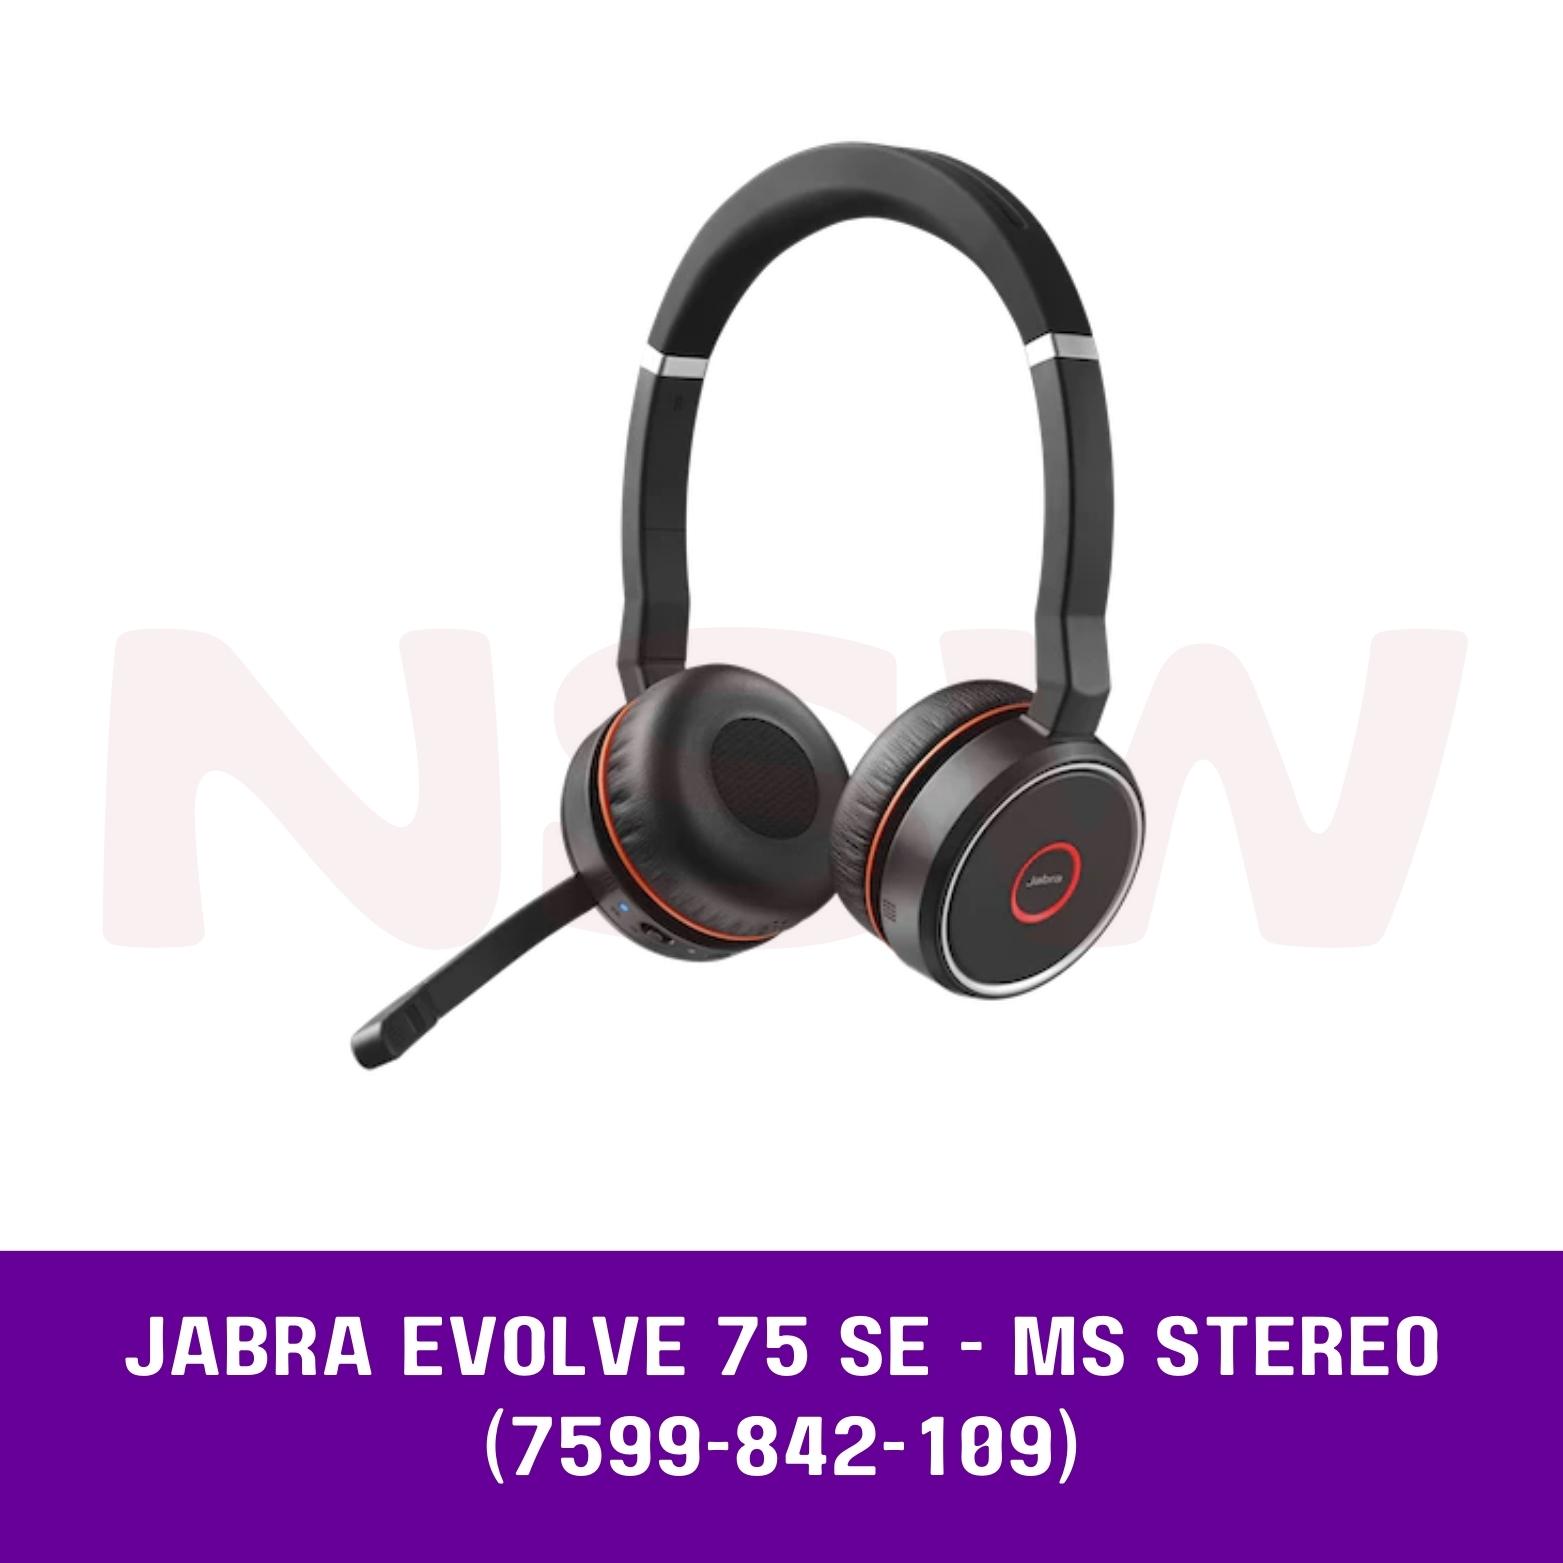 GNオーディオ 7599-848-109 Jabra Evolve 75 SE Link380a UC Stereo-